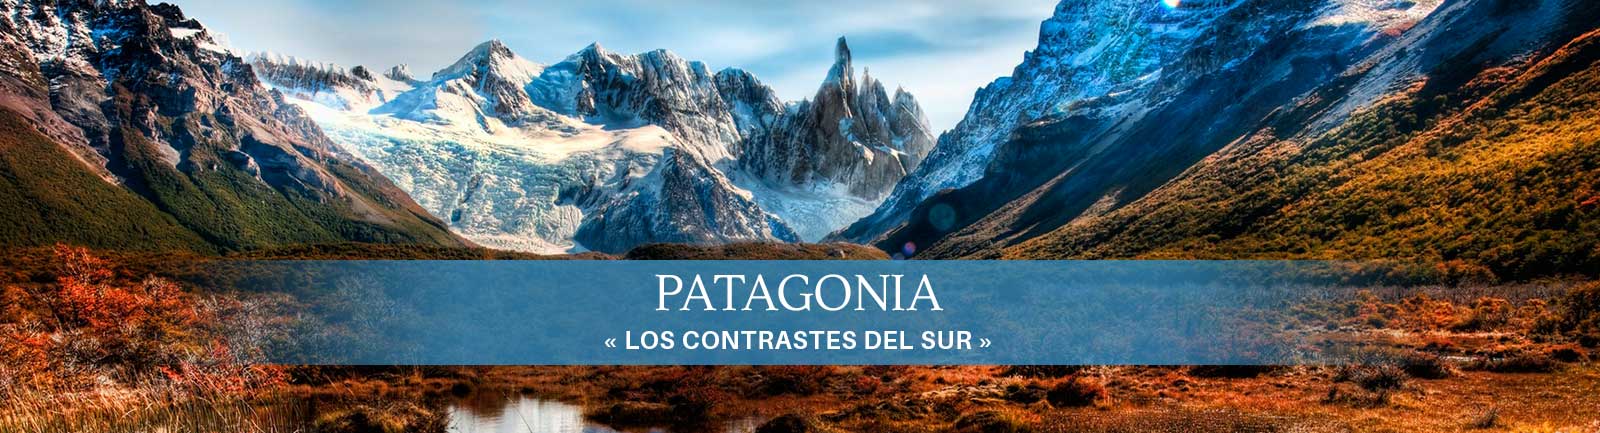 Destino Patagonia